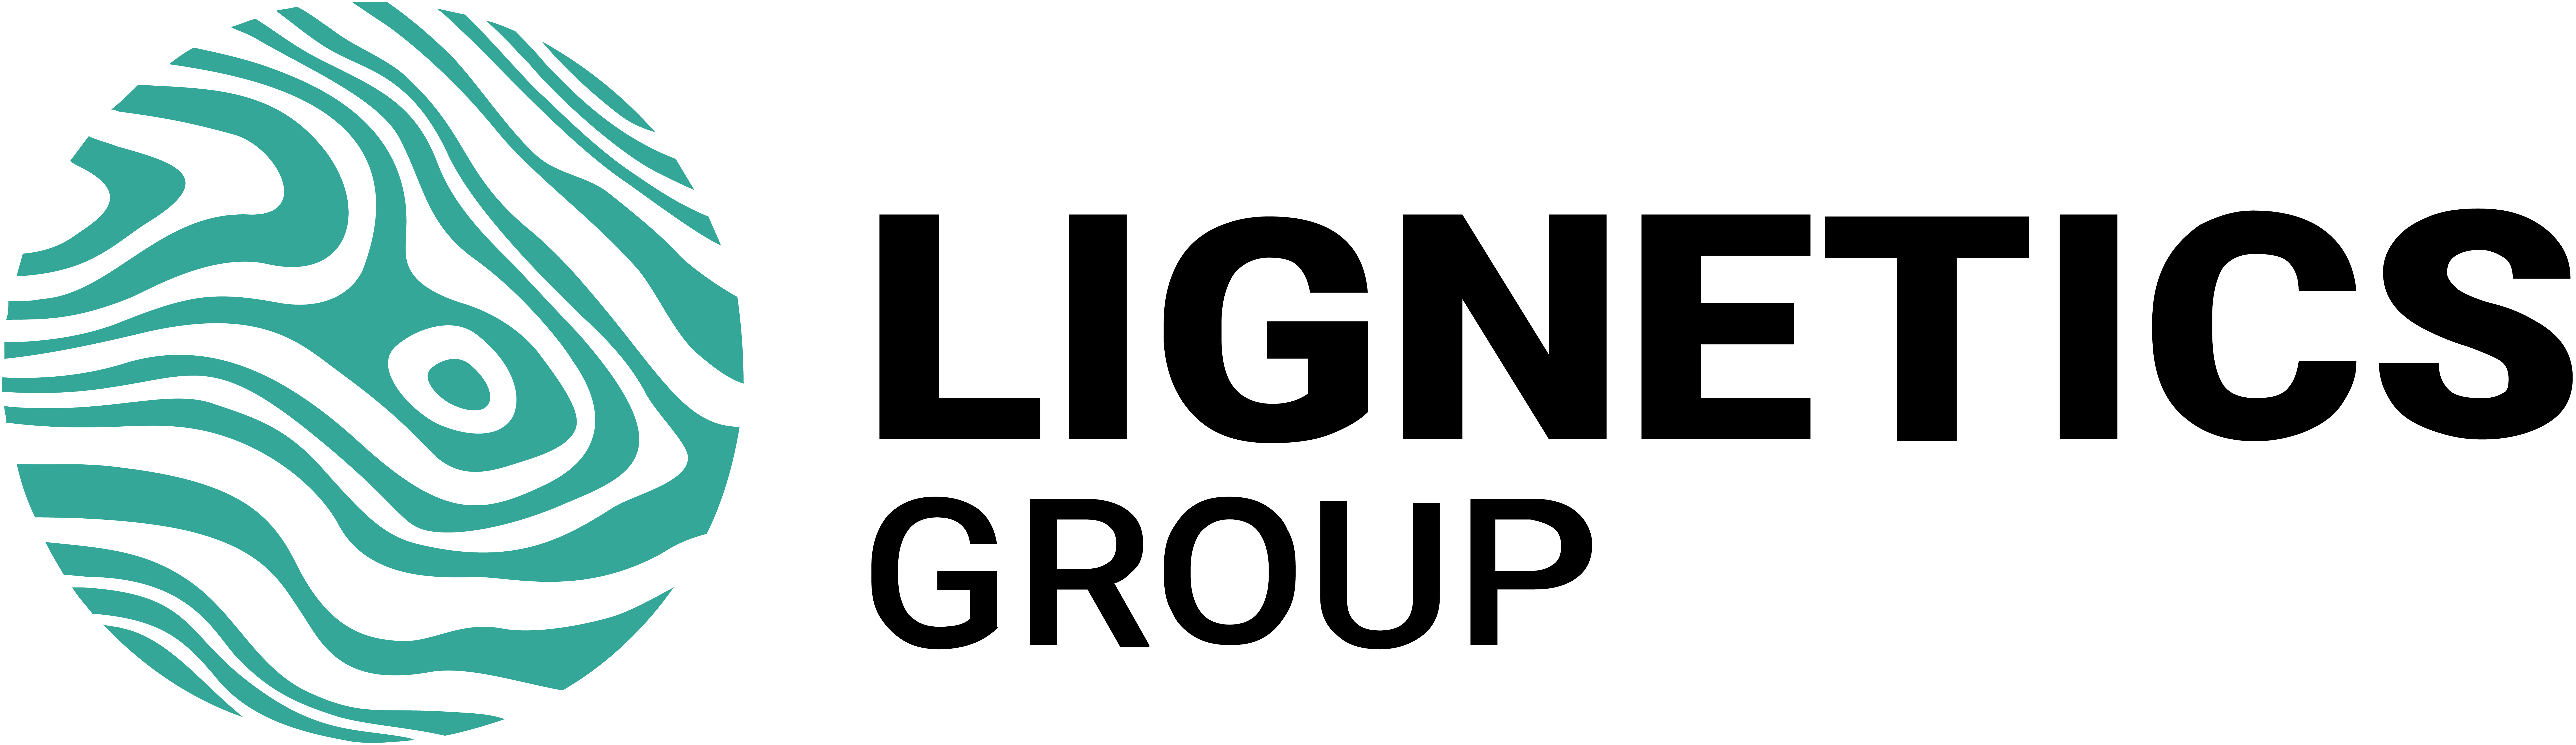 Lignetics Group Logo